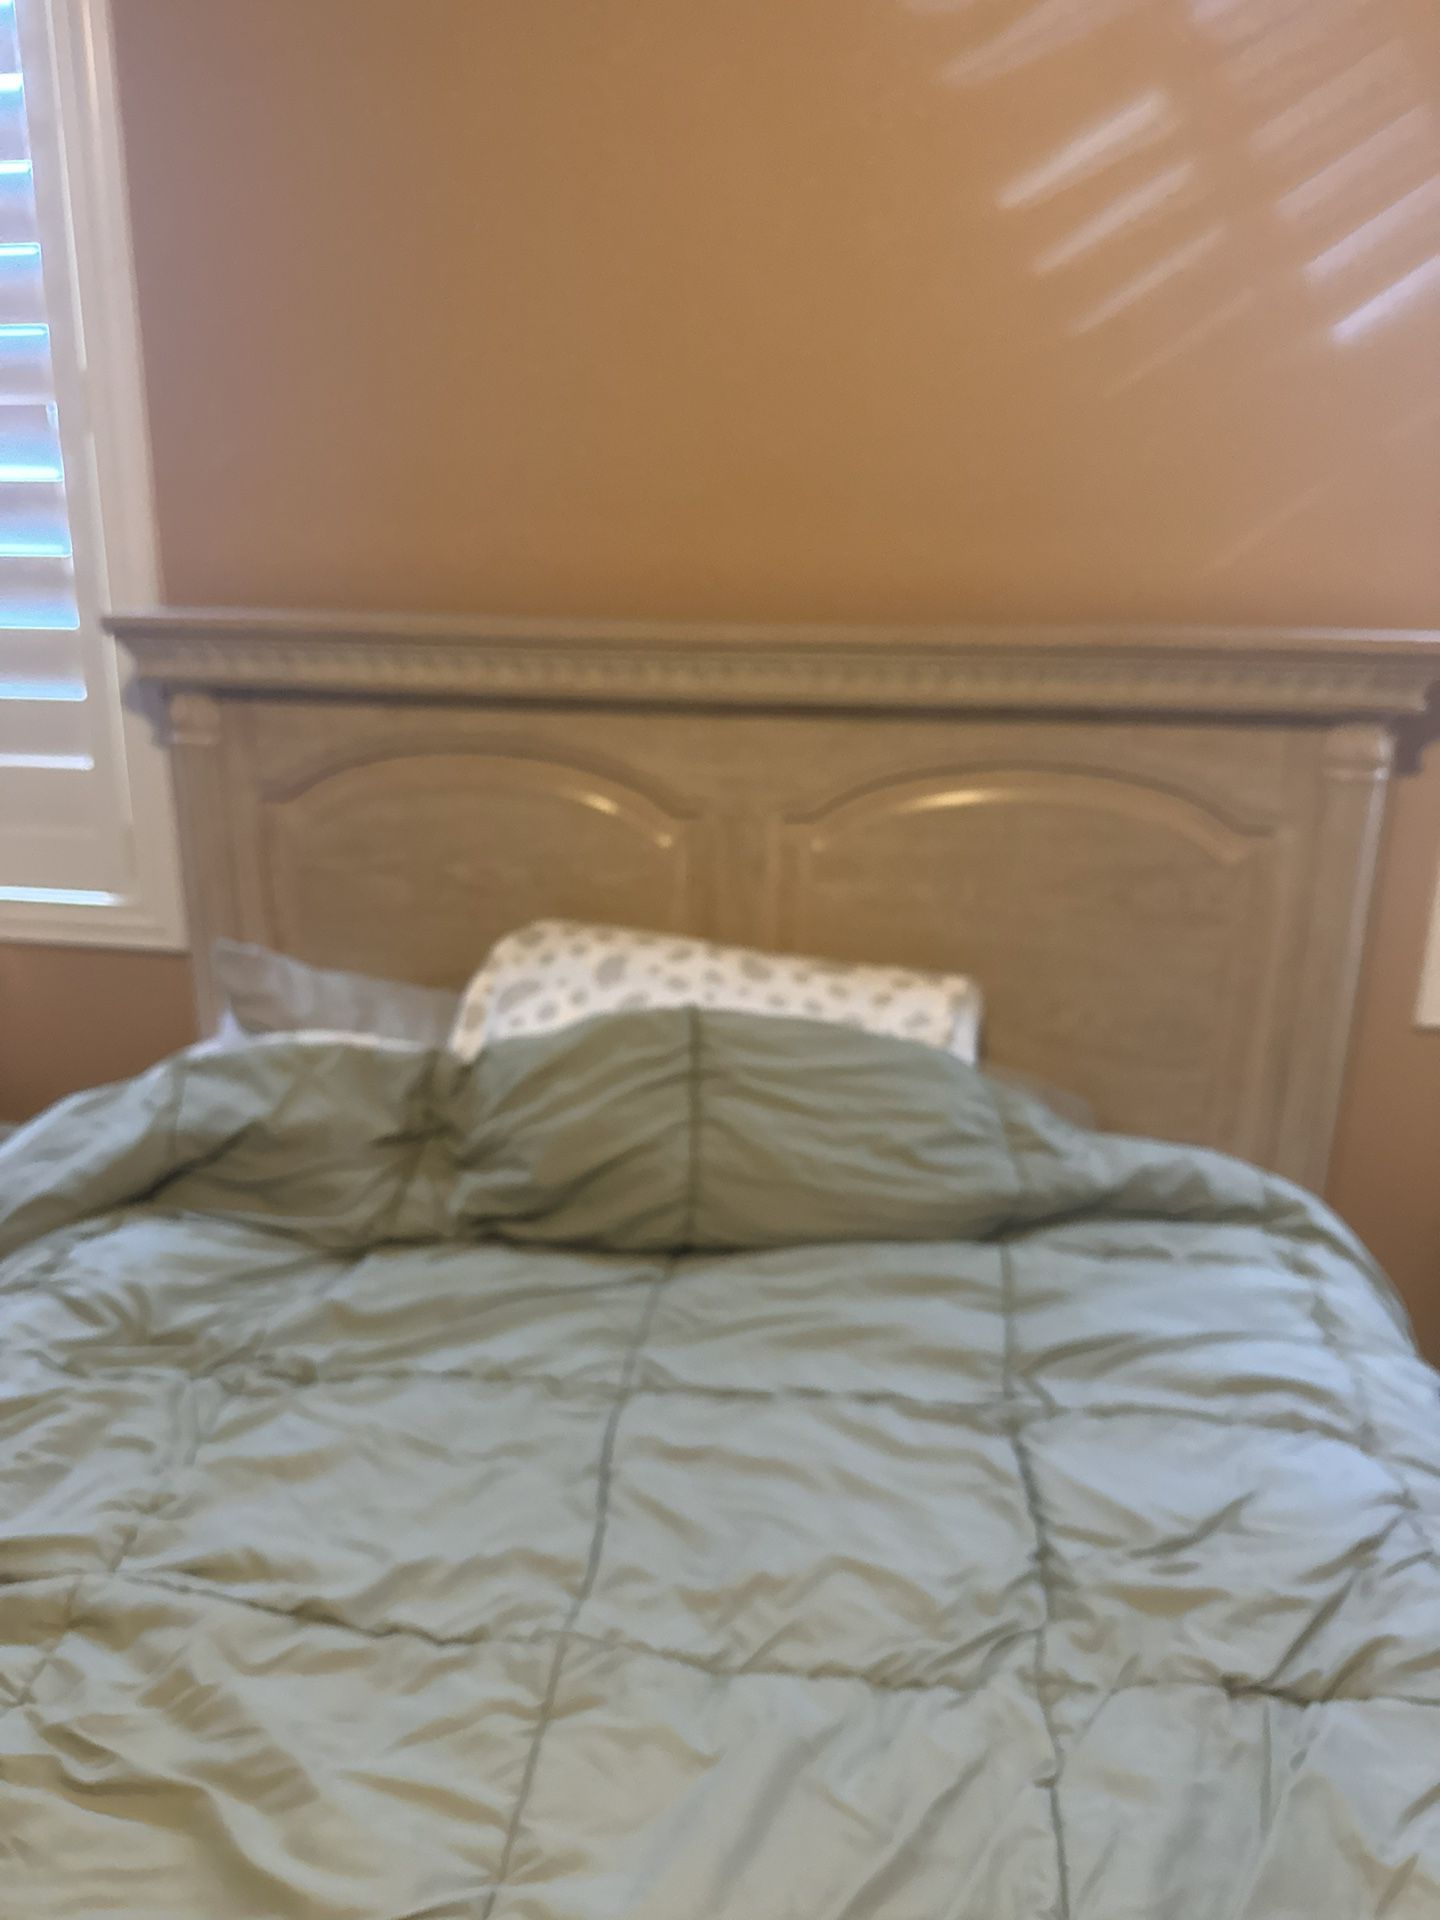 Fullsize Bed Frame And Mattress 